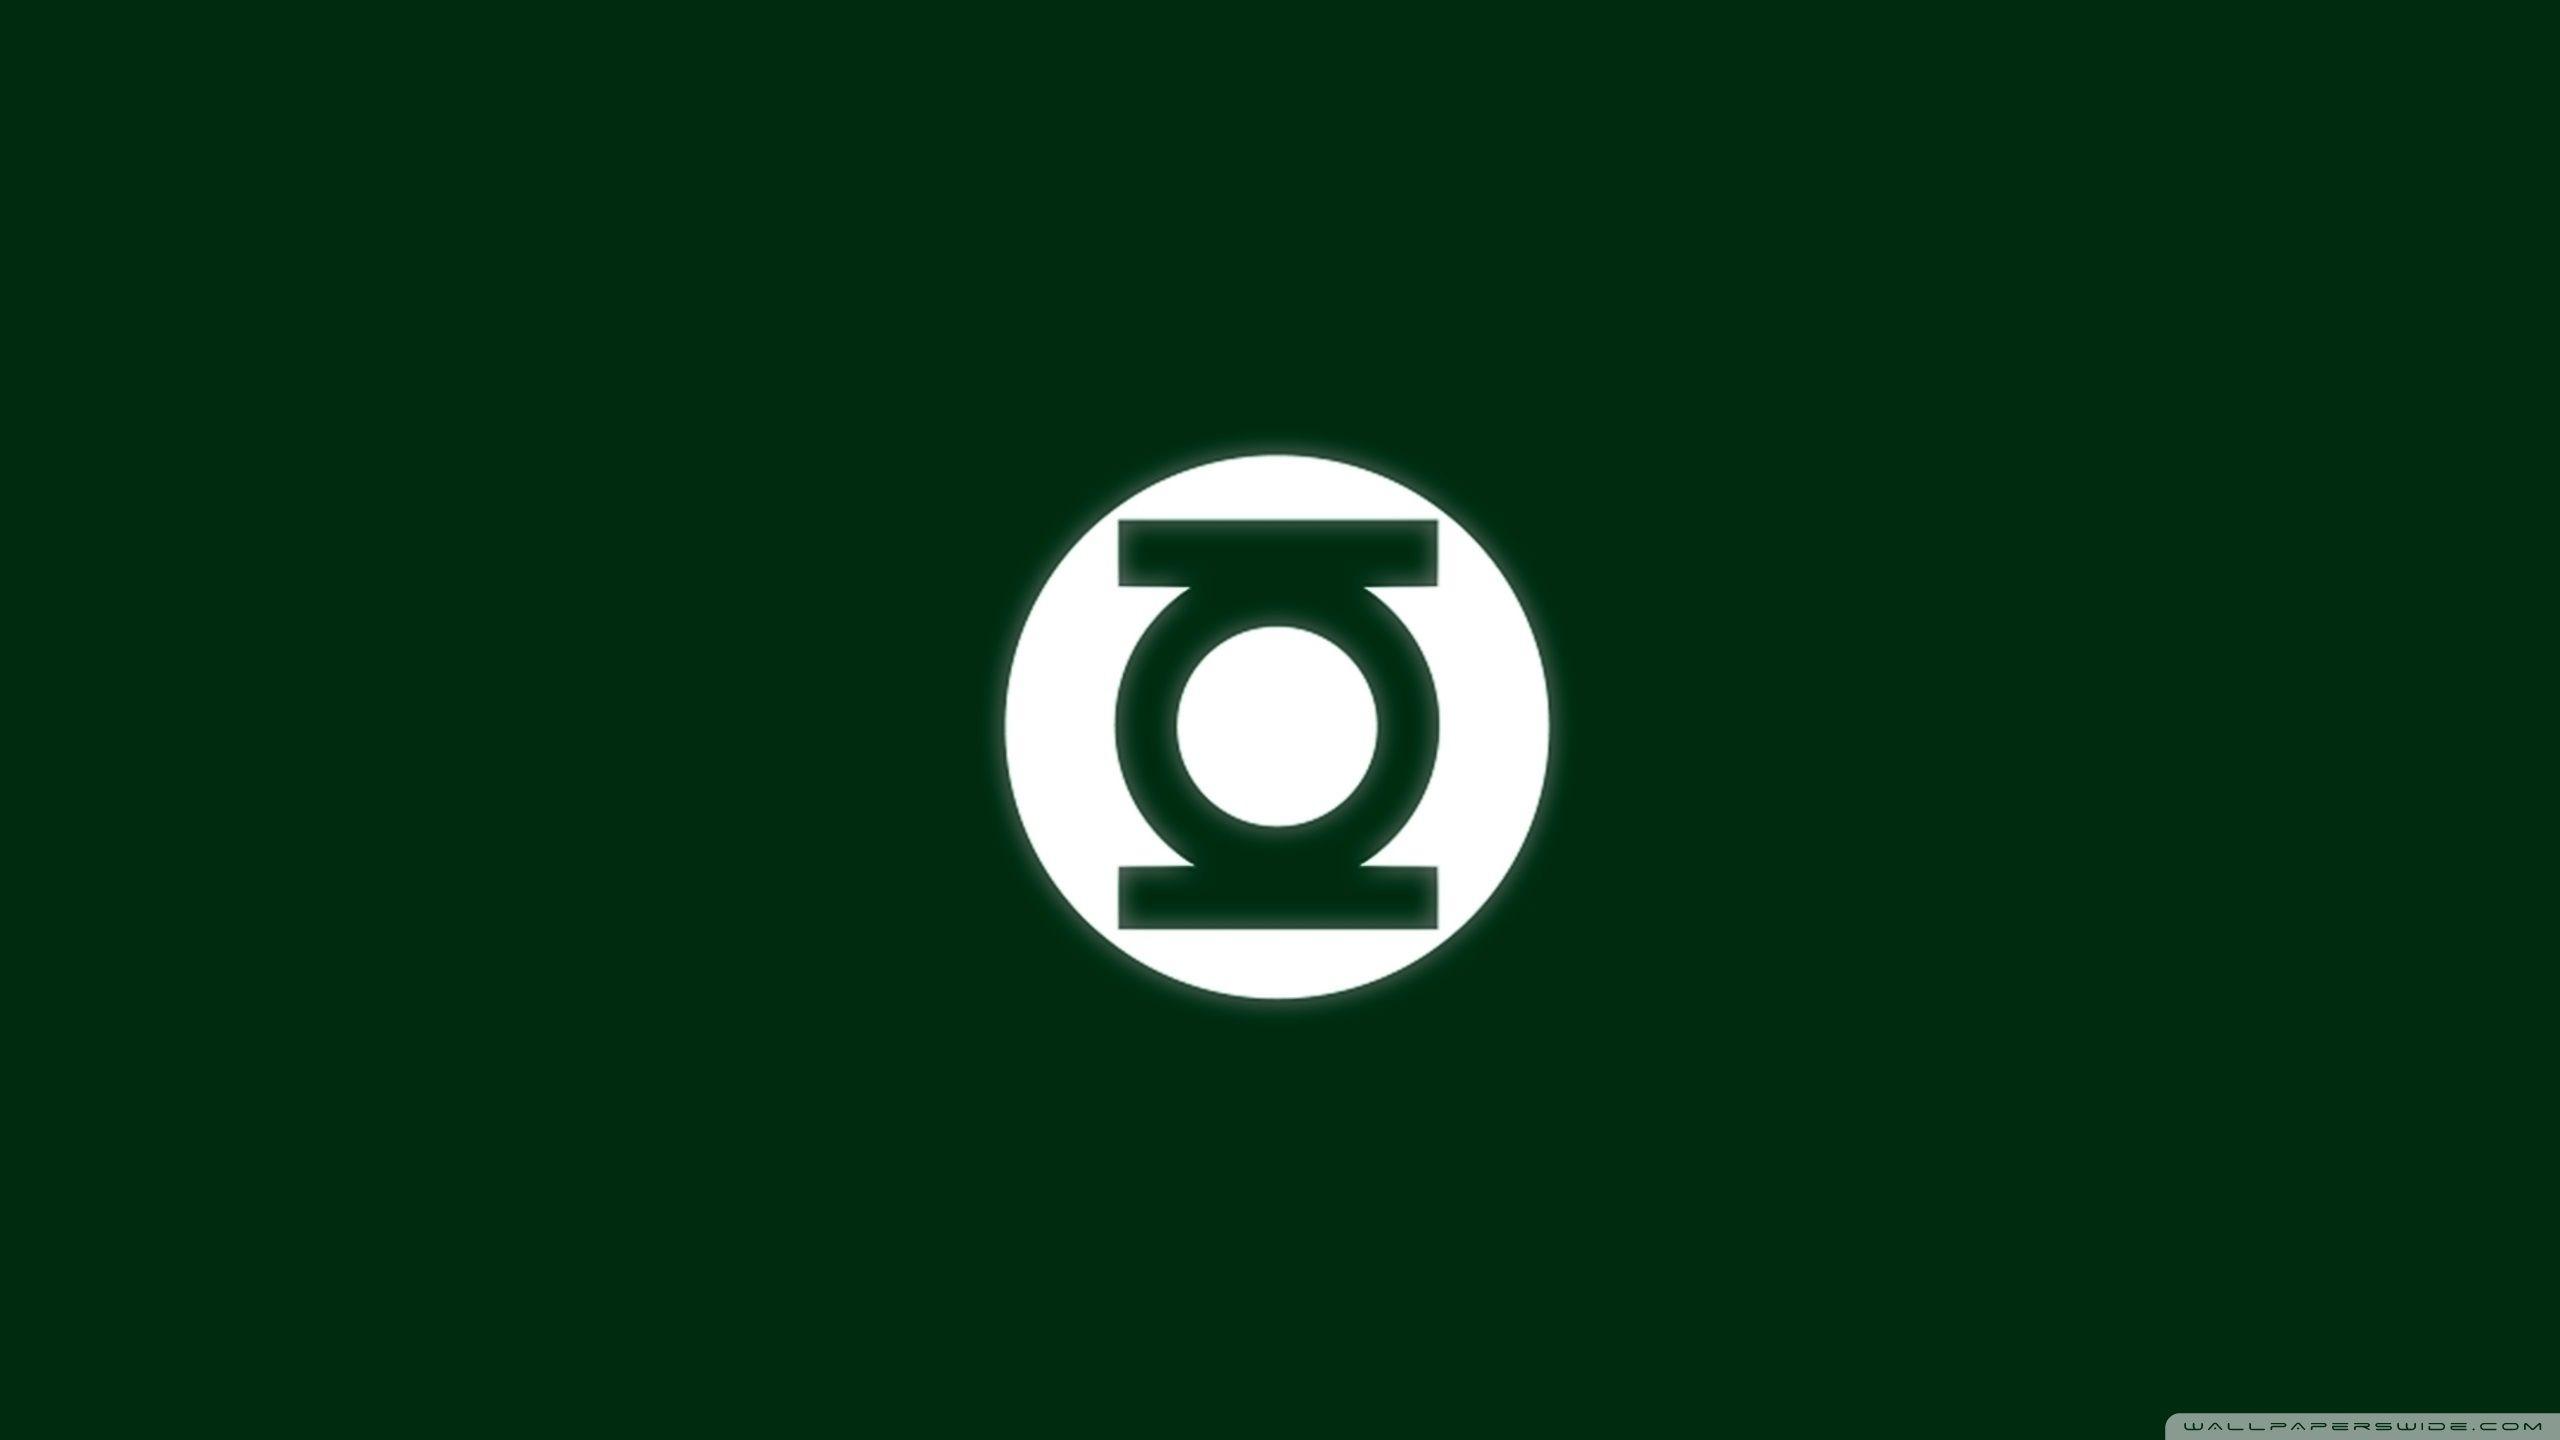 Top Green Lantern Logo Wallpaper FULL HD 1920×1080 For PC Desktop. Green lantern logo, Green lantern wallpaper, Green lantern